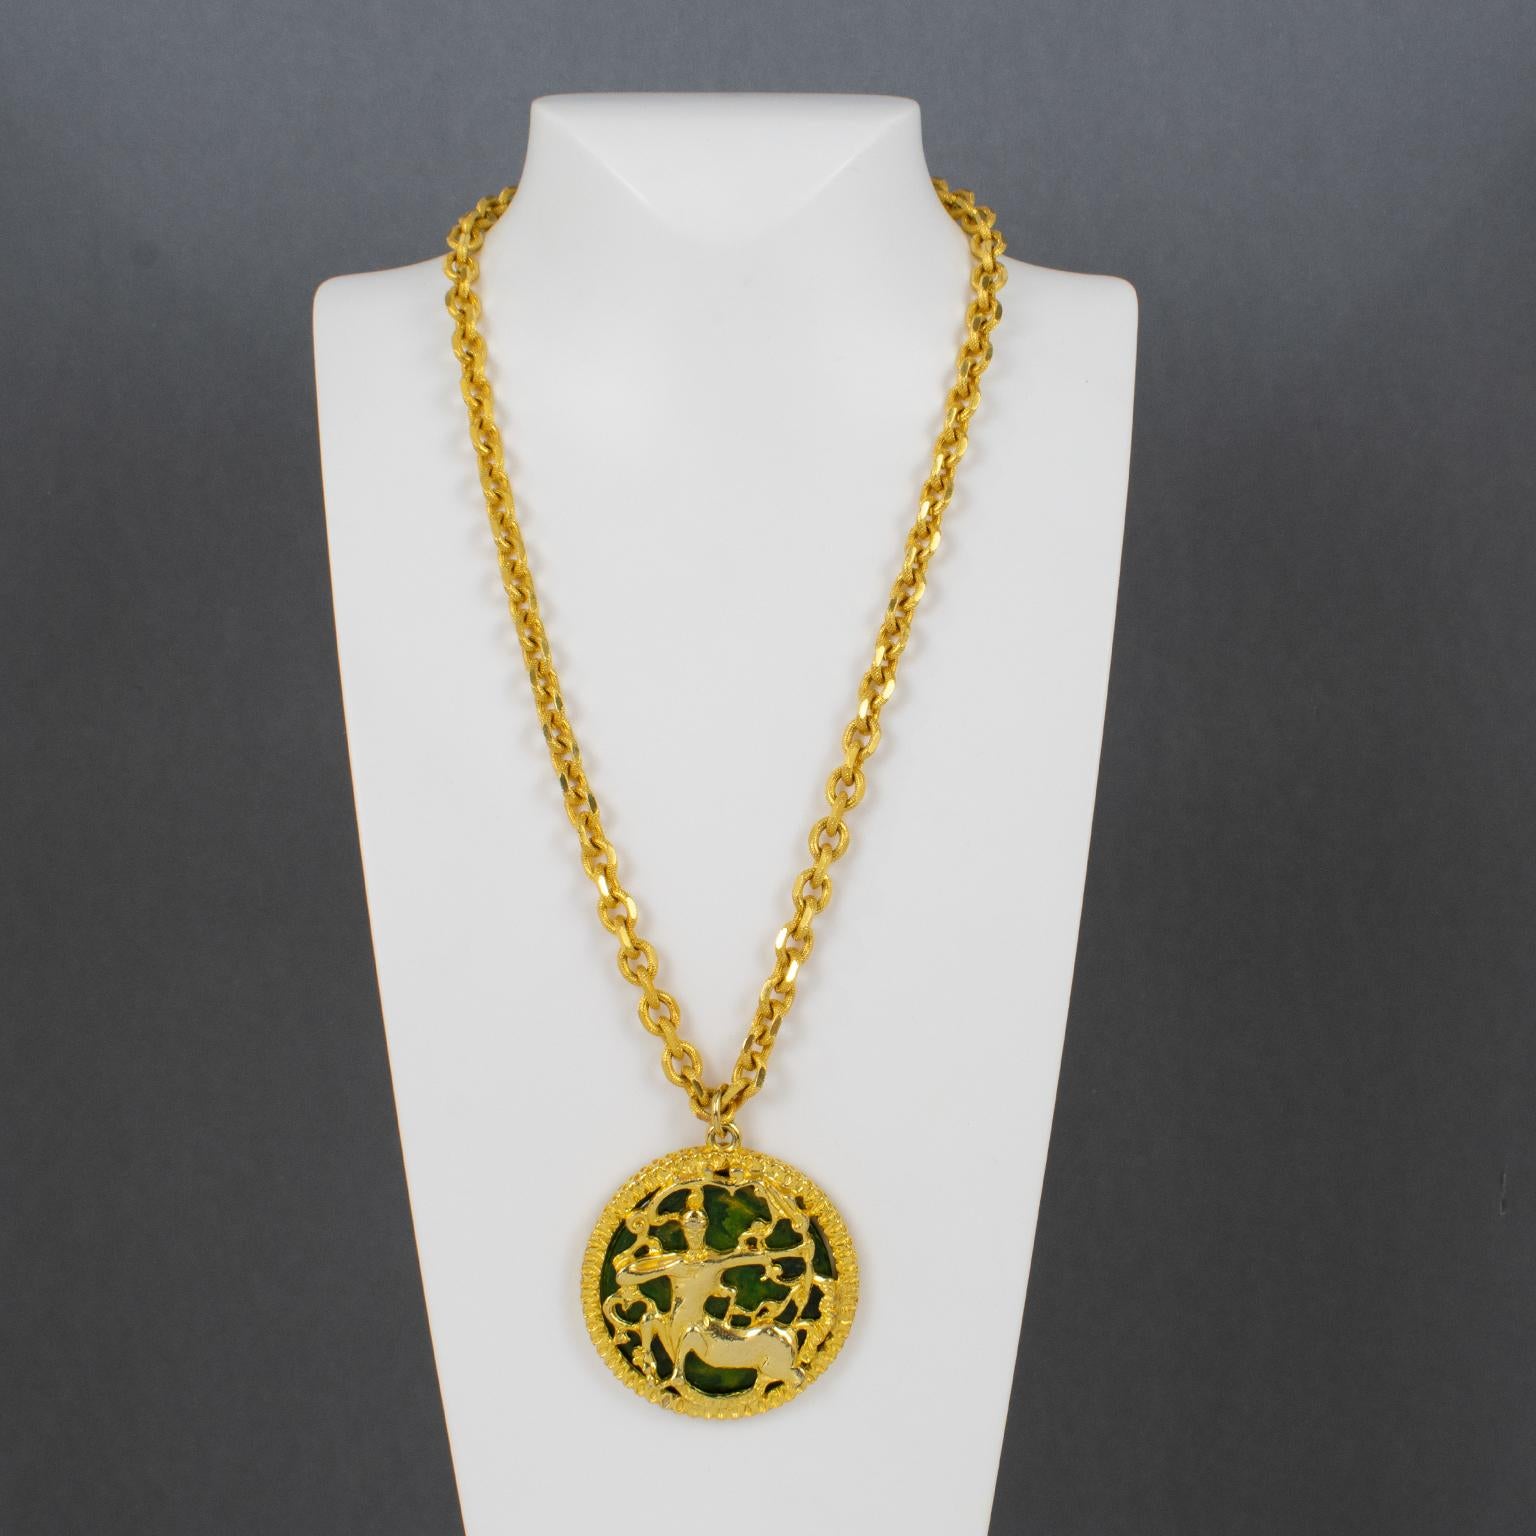 Modern Pauline Rader Gilt Metal Necklace with Centaur Pendant and Green Bakelite, 1970s For Sale